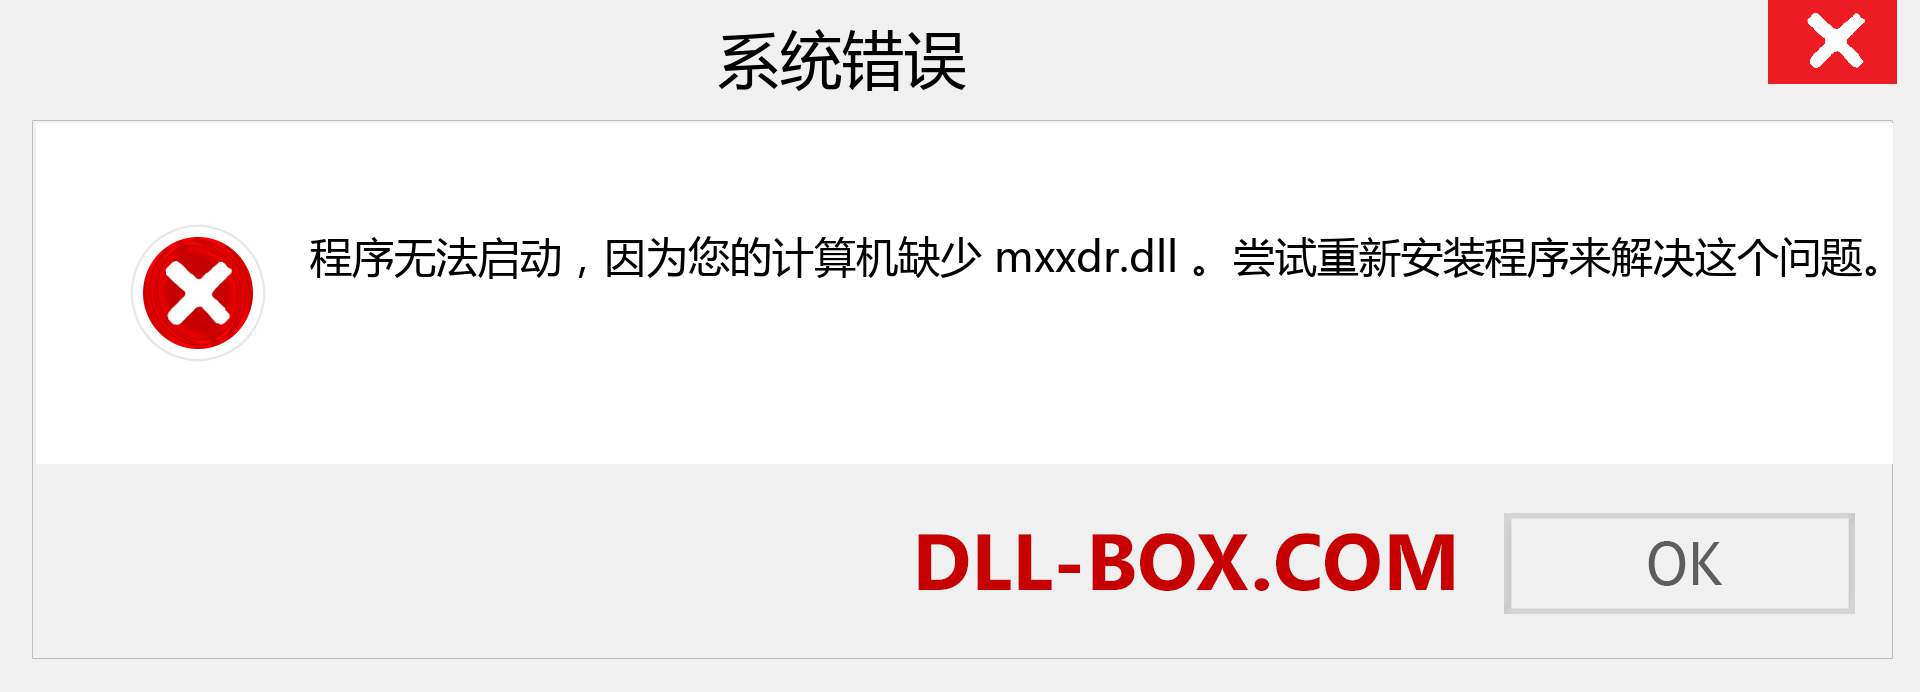 mxxdr.dll 文件丢失？。 适用于 Windows 7、8、10 的下载 - 修复 Windows、照片、图像上的 mxxdr dll 丢失错误